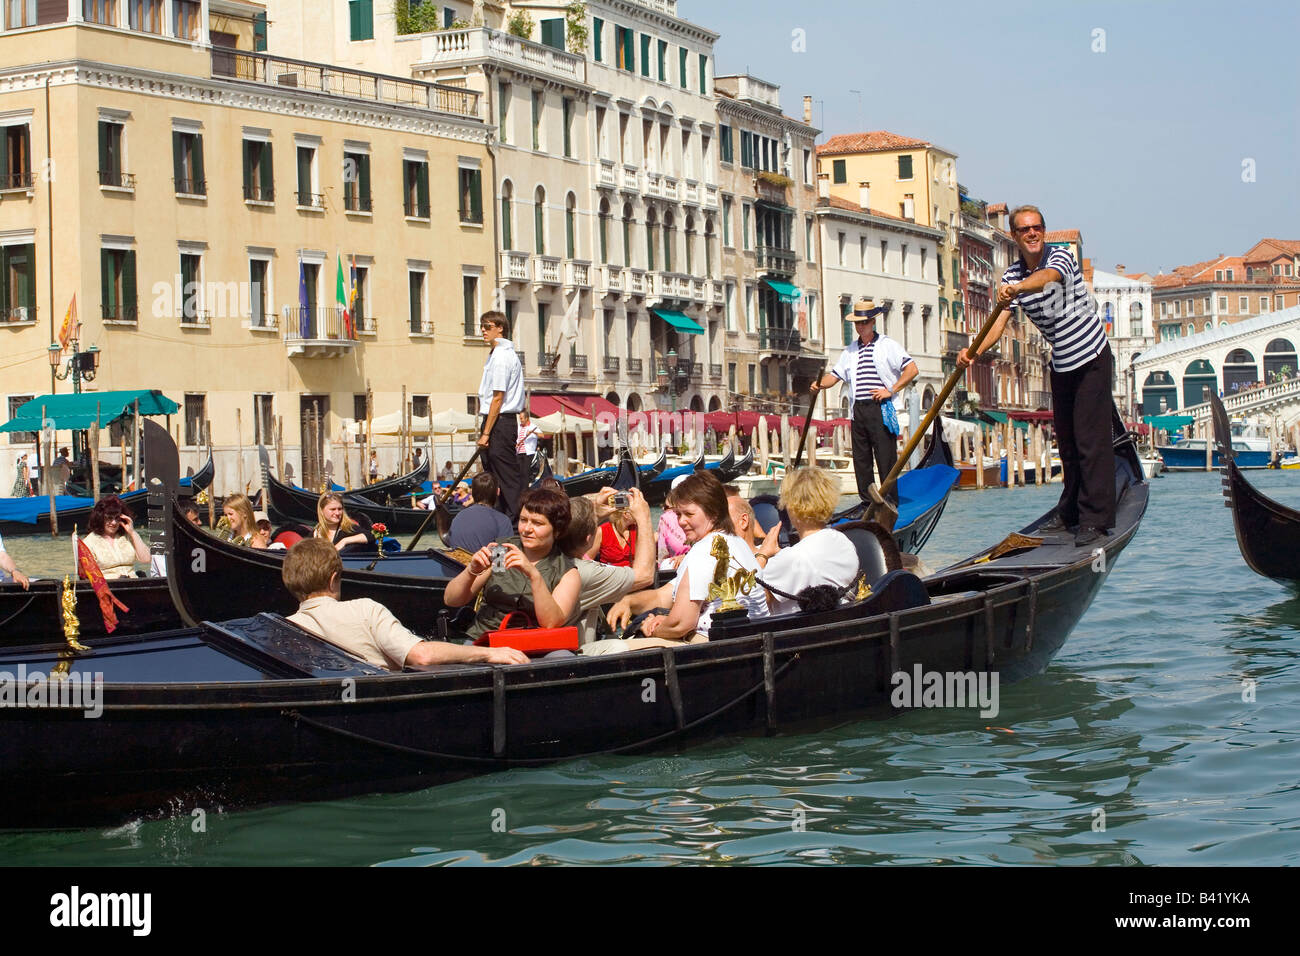 Taking a Gondola ride near the Rialto Bridge in Venice Italy Stock Photo